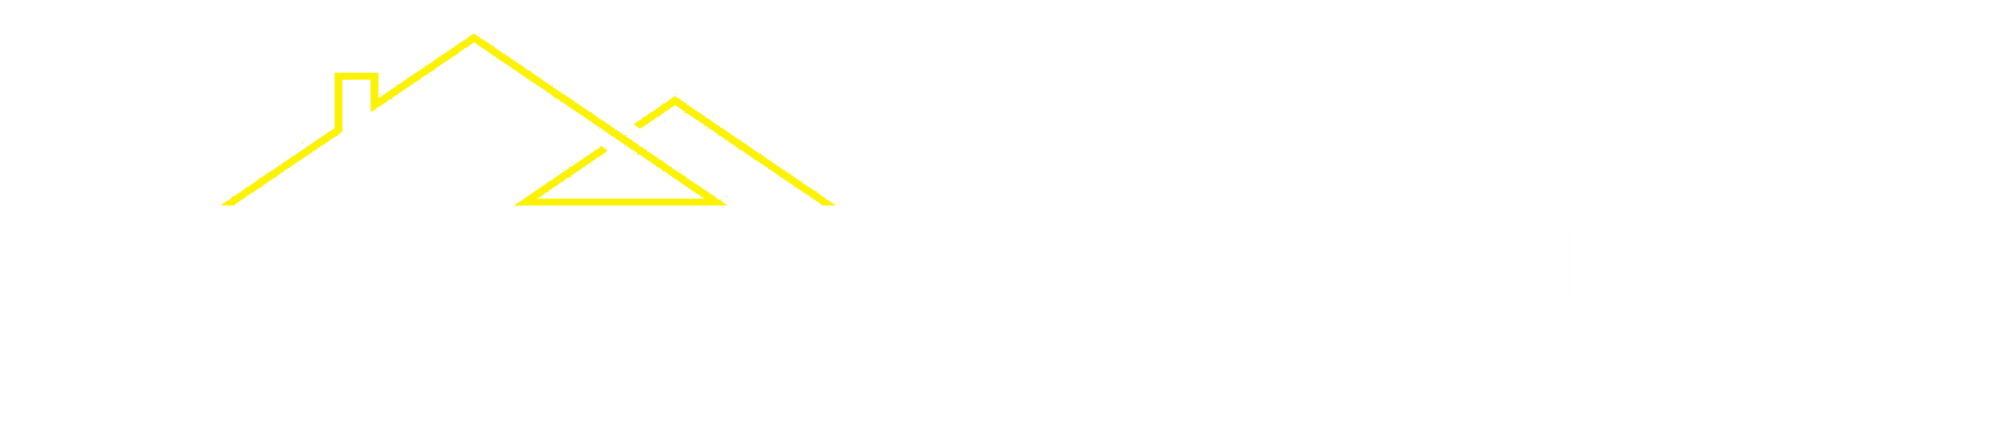 Covington-logo-combined.png